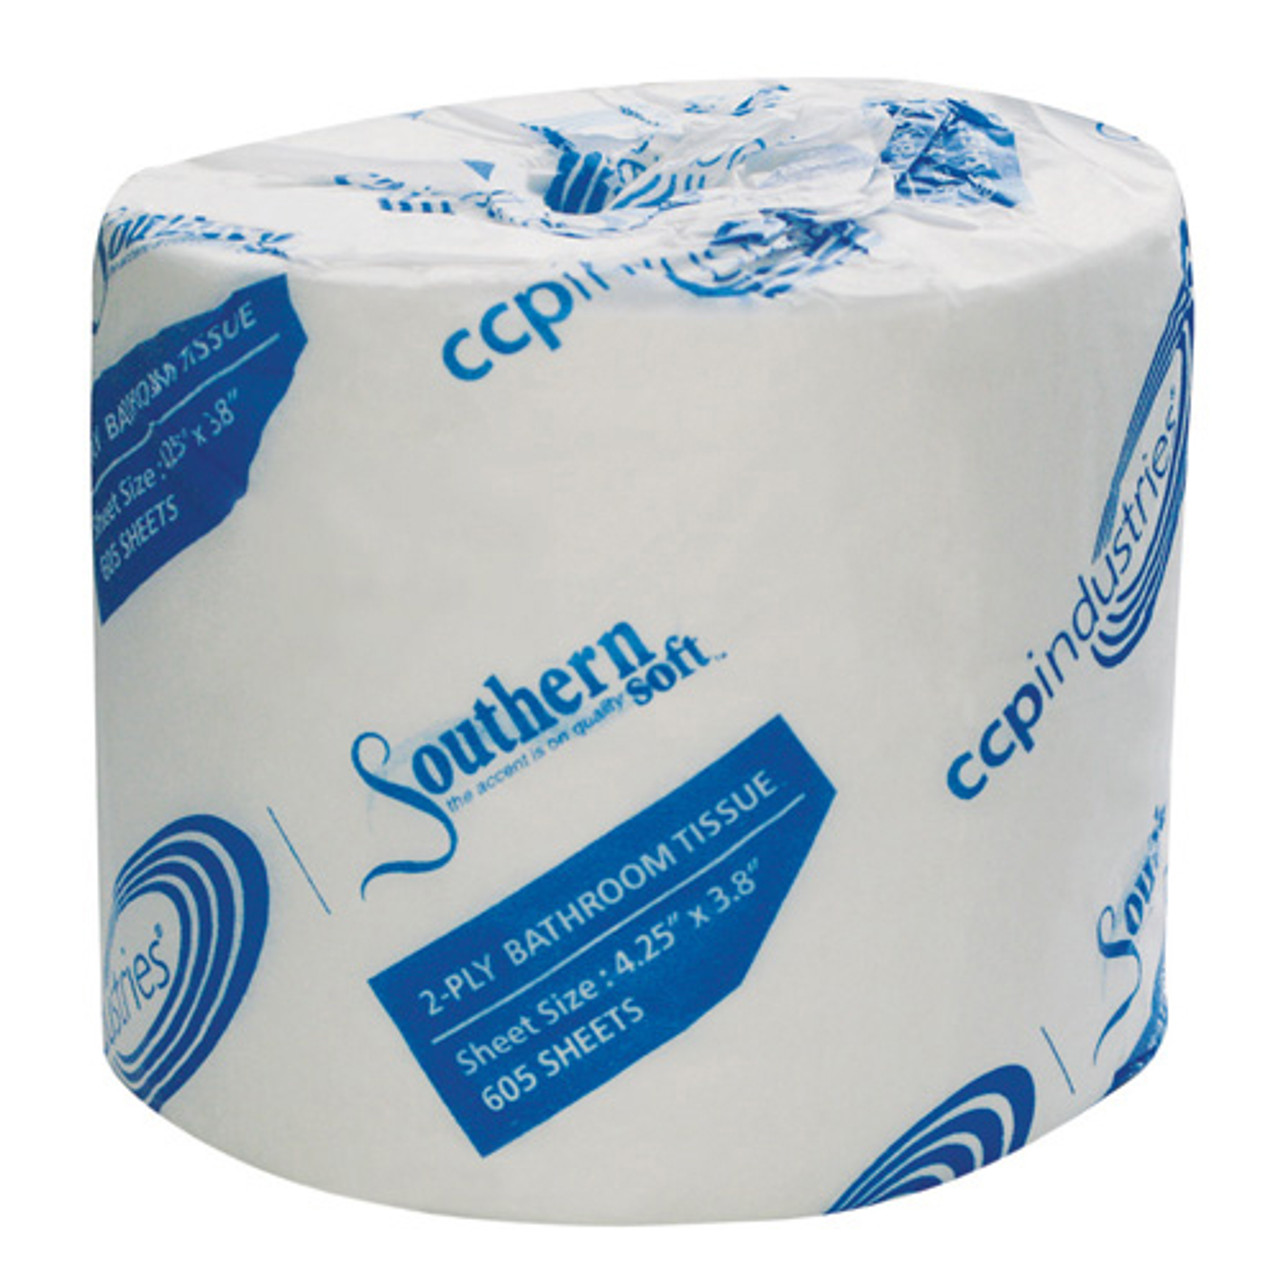 Bathroom Tissue, Standard Roll, Bulk, 96 rolls per case - Tautala's